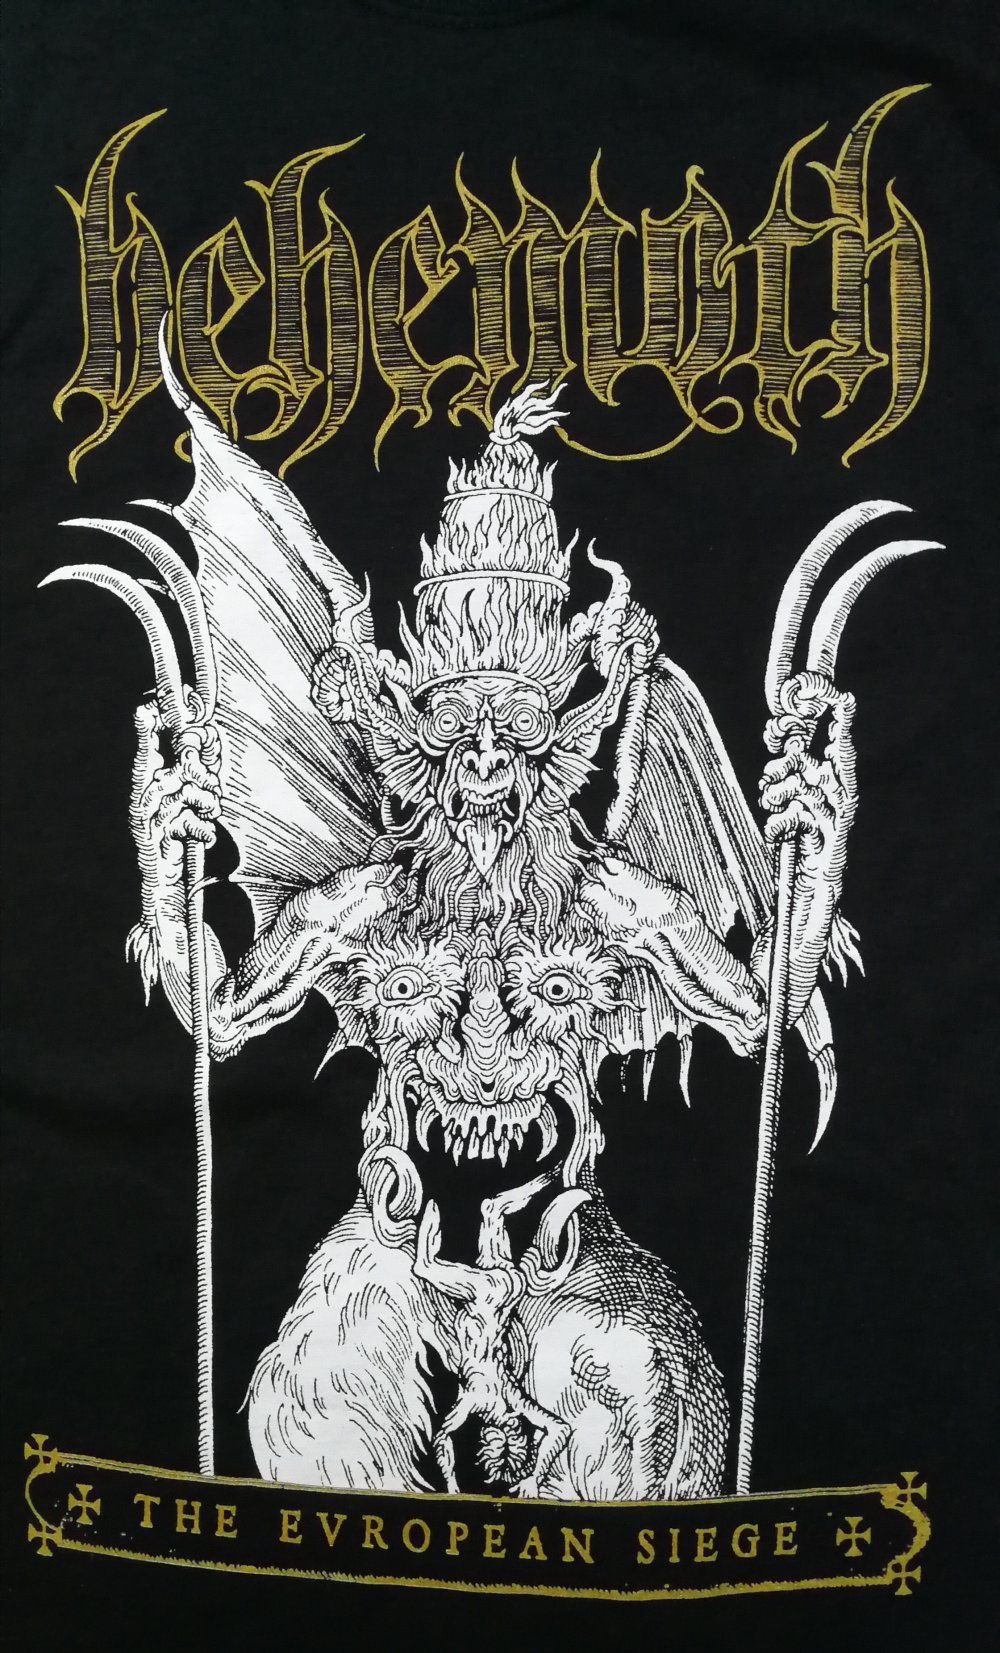 Behemoth Bandshirt Longsleeve Tourshirt NEU The European Siege Tourdaten Unisex Gr. S